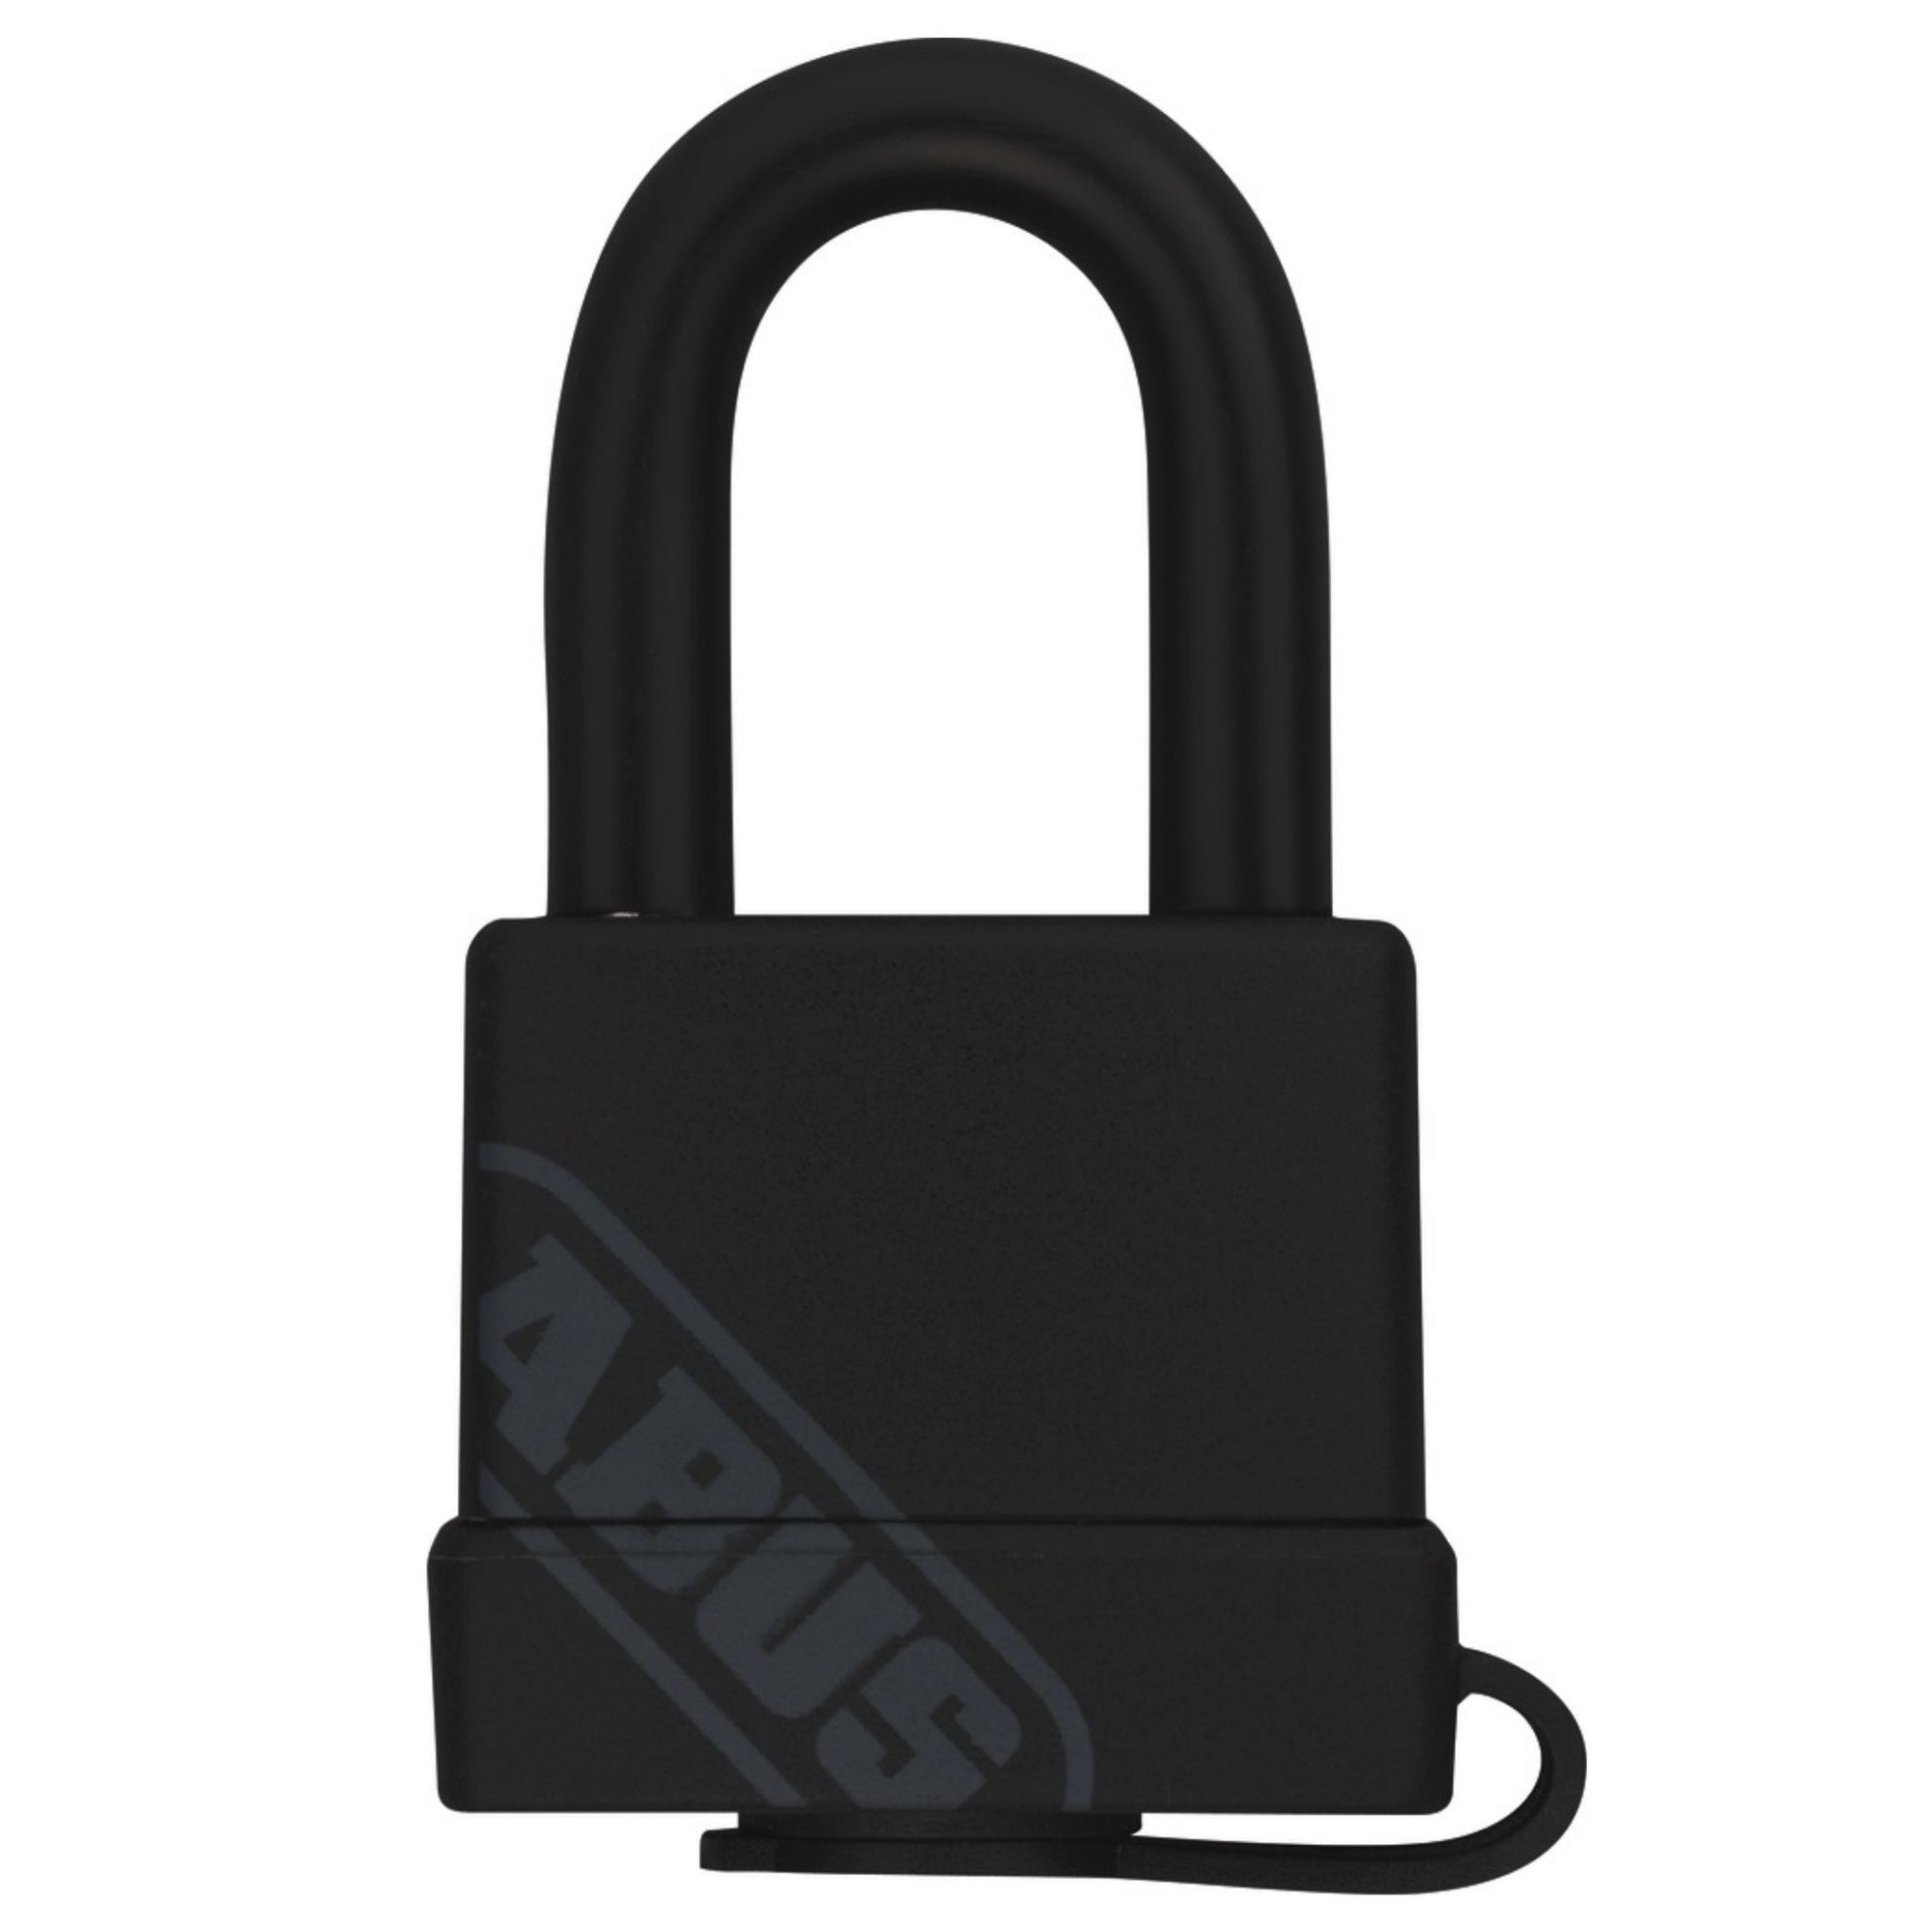 Abus 70/35 KD Lock Keyed Different Weatherproof Brass Padlocks - The Lock Source